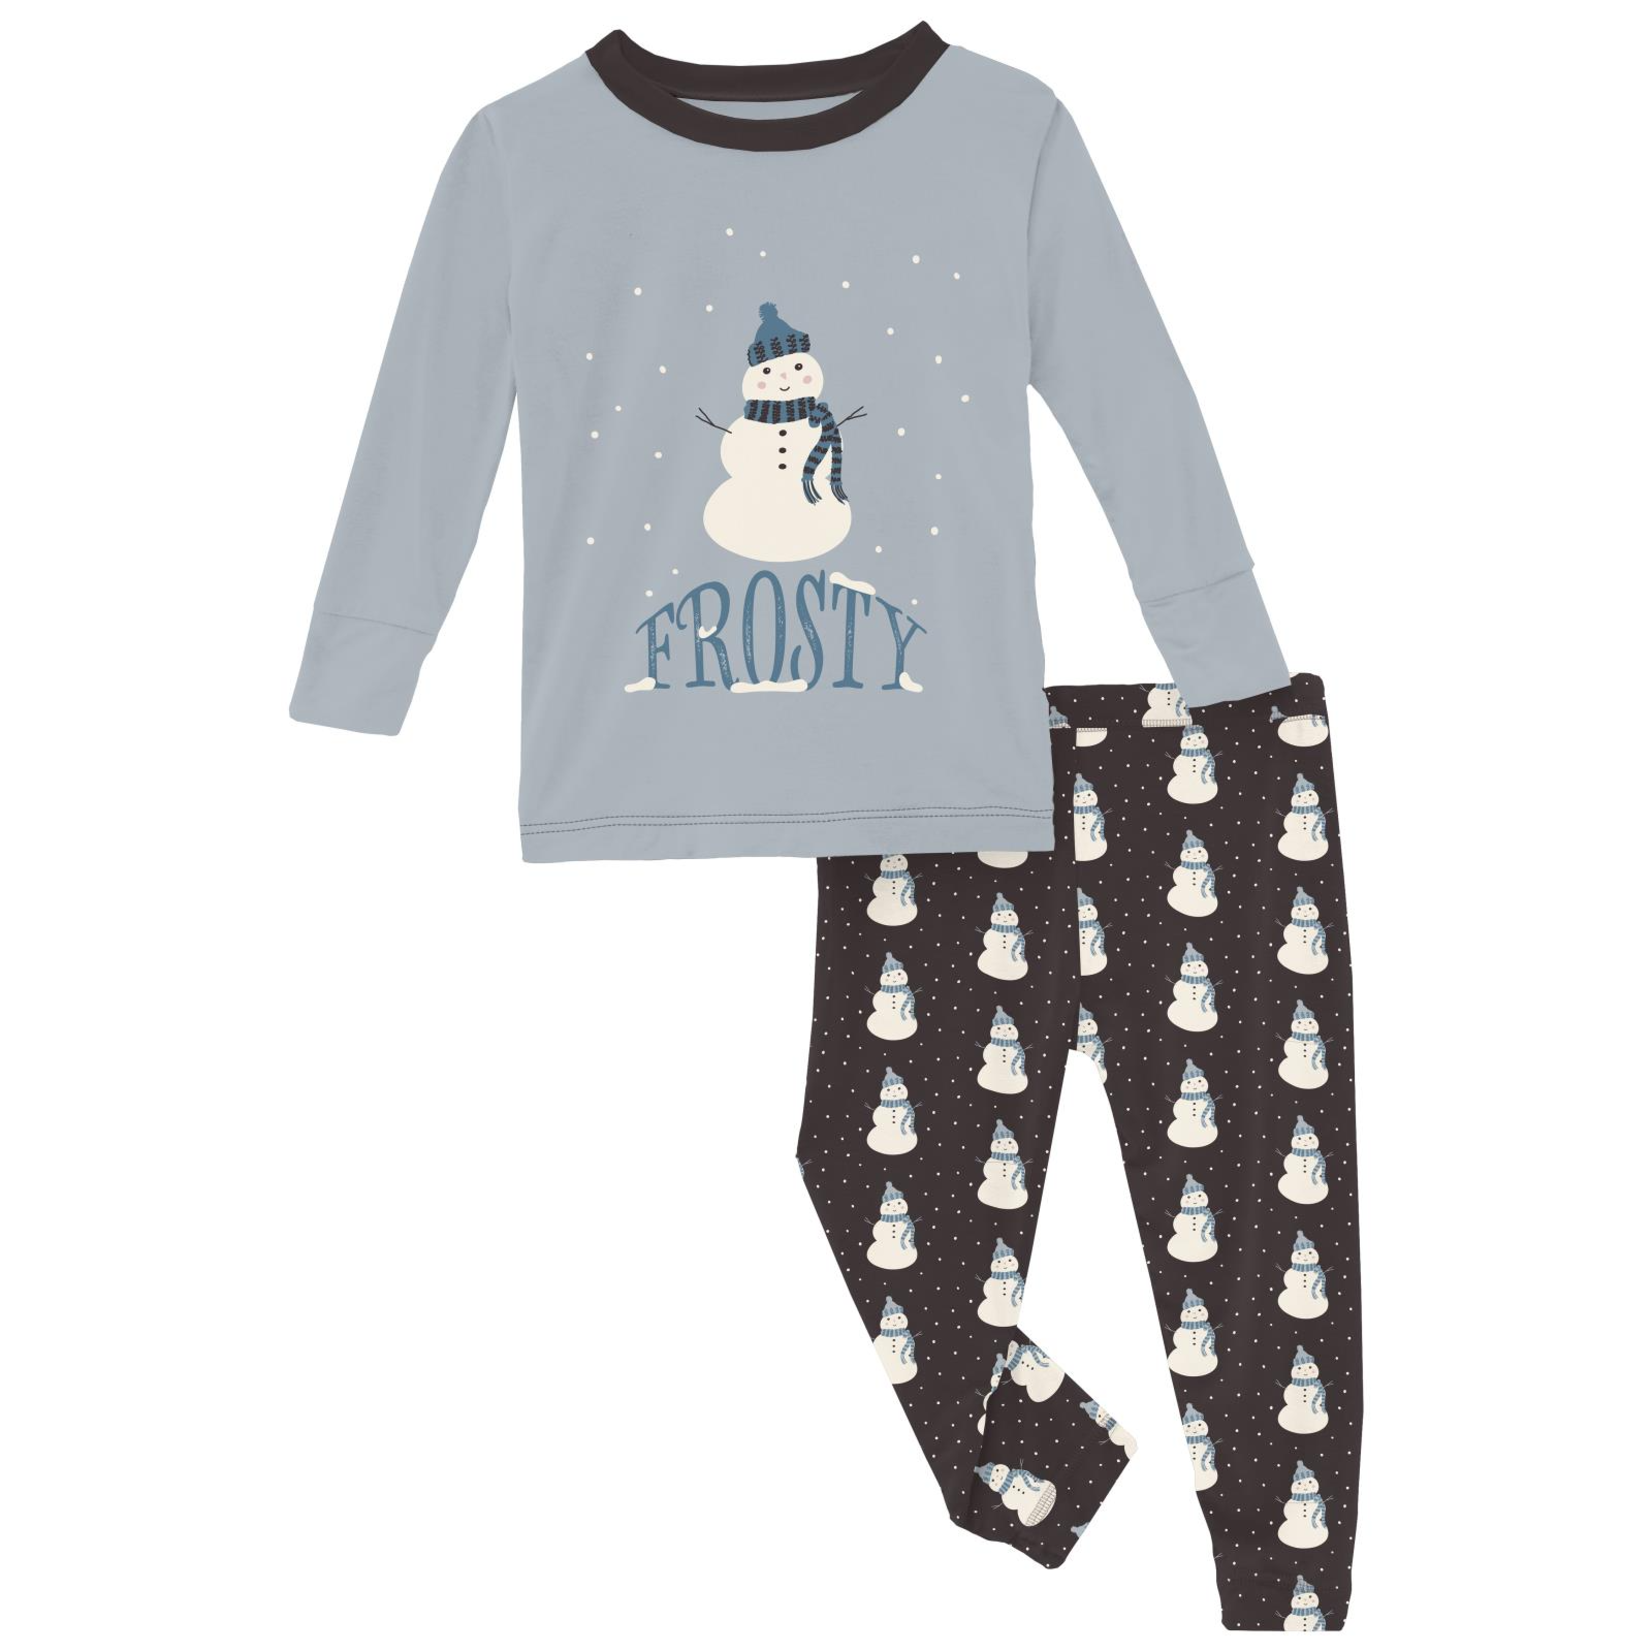 Long Sleeve Graphic Tee Pajama Set in Midnight Tiny Snowman